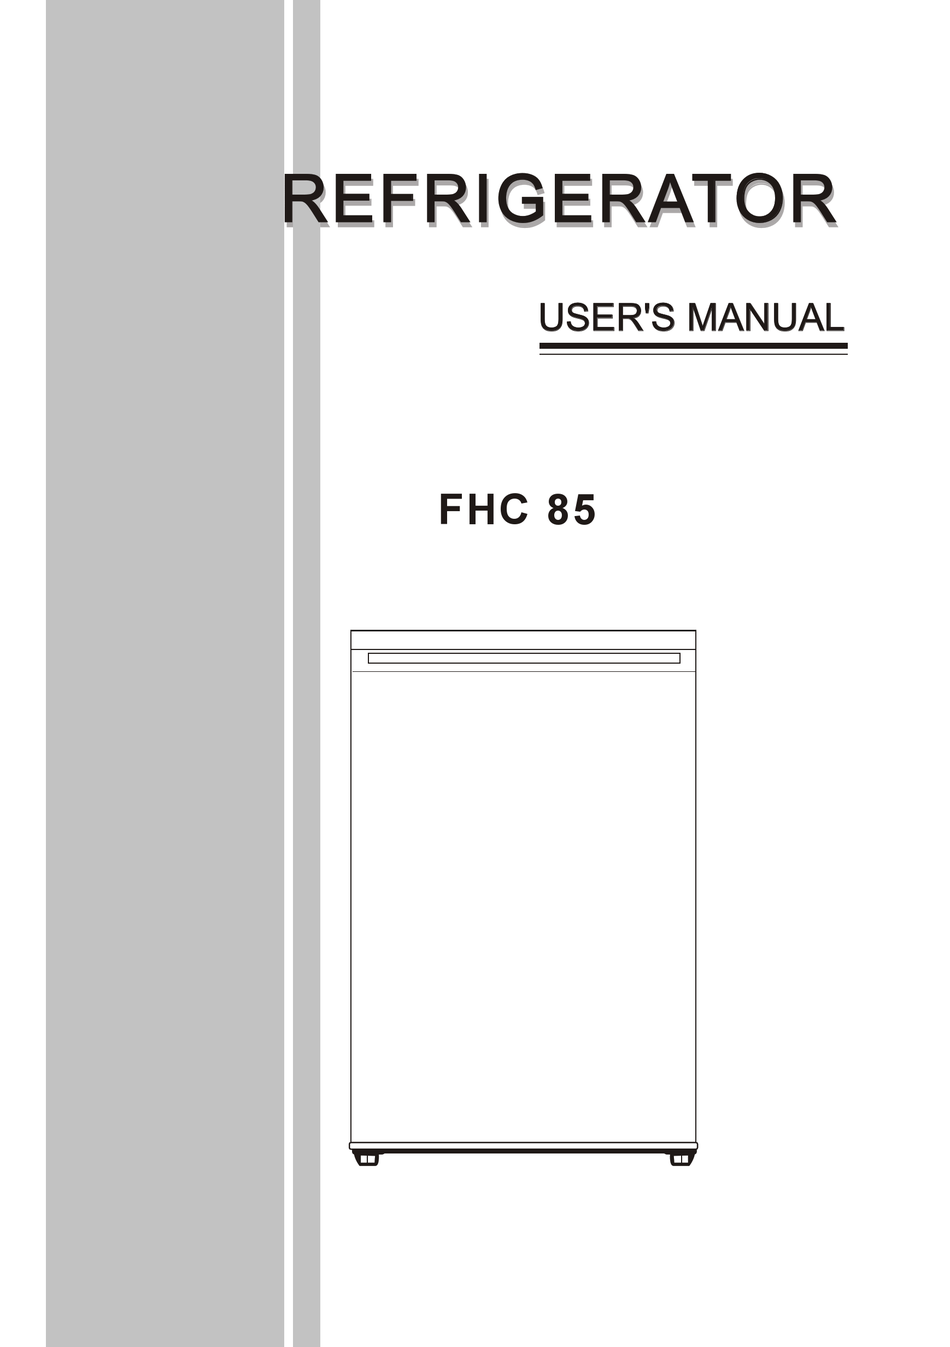 FRIGOR FHC 85 USER MANUAL Pdf Download | ManualsLib